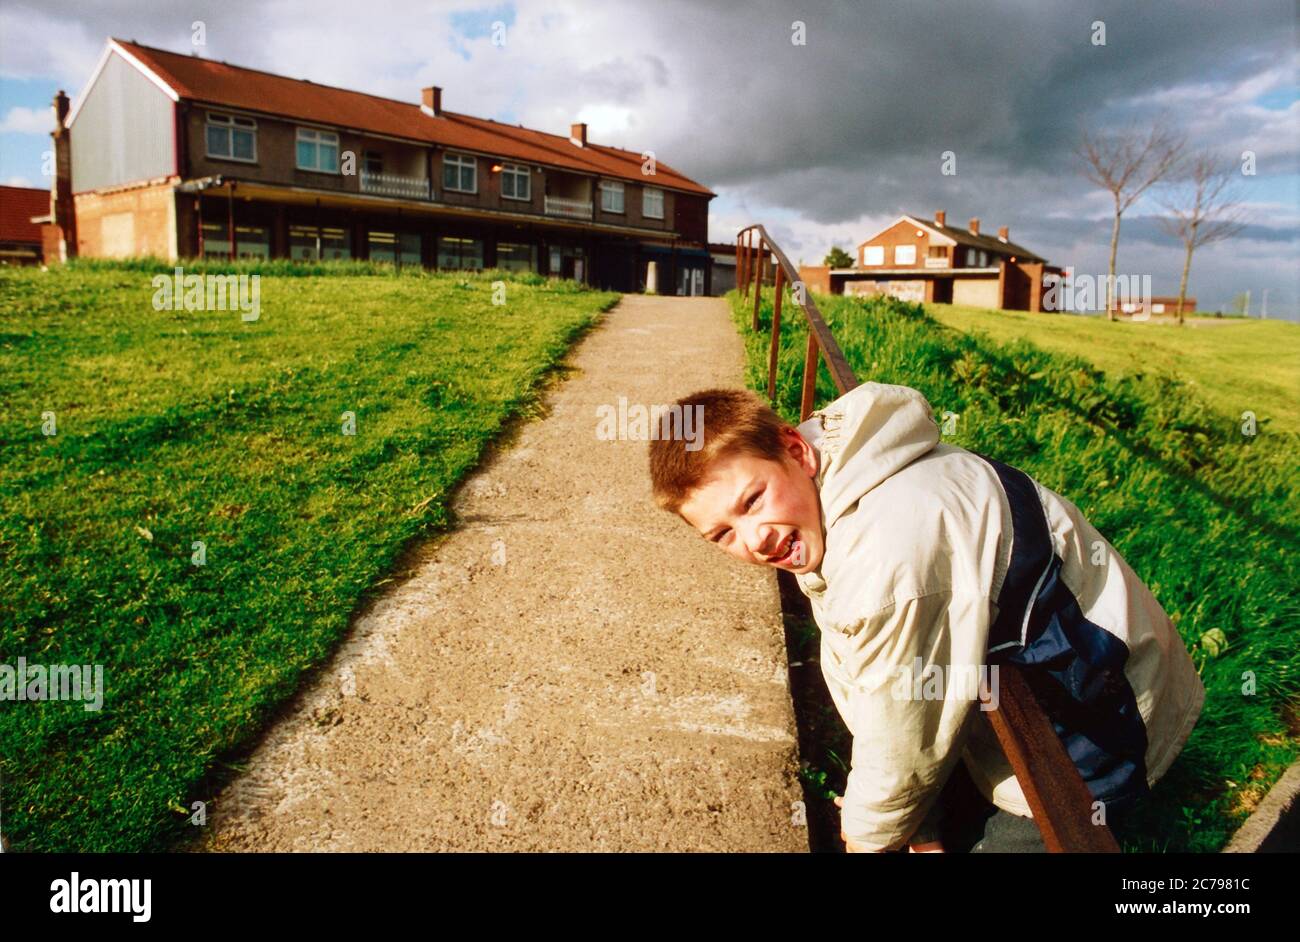 Boy playing on Bradford Housing estate Stock Photo